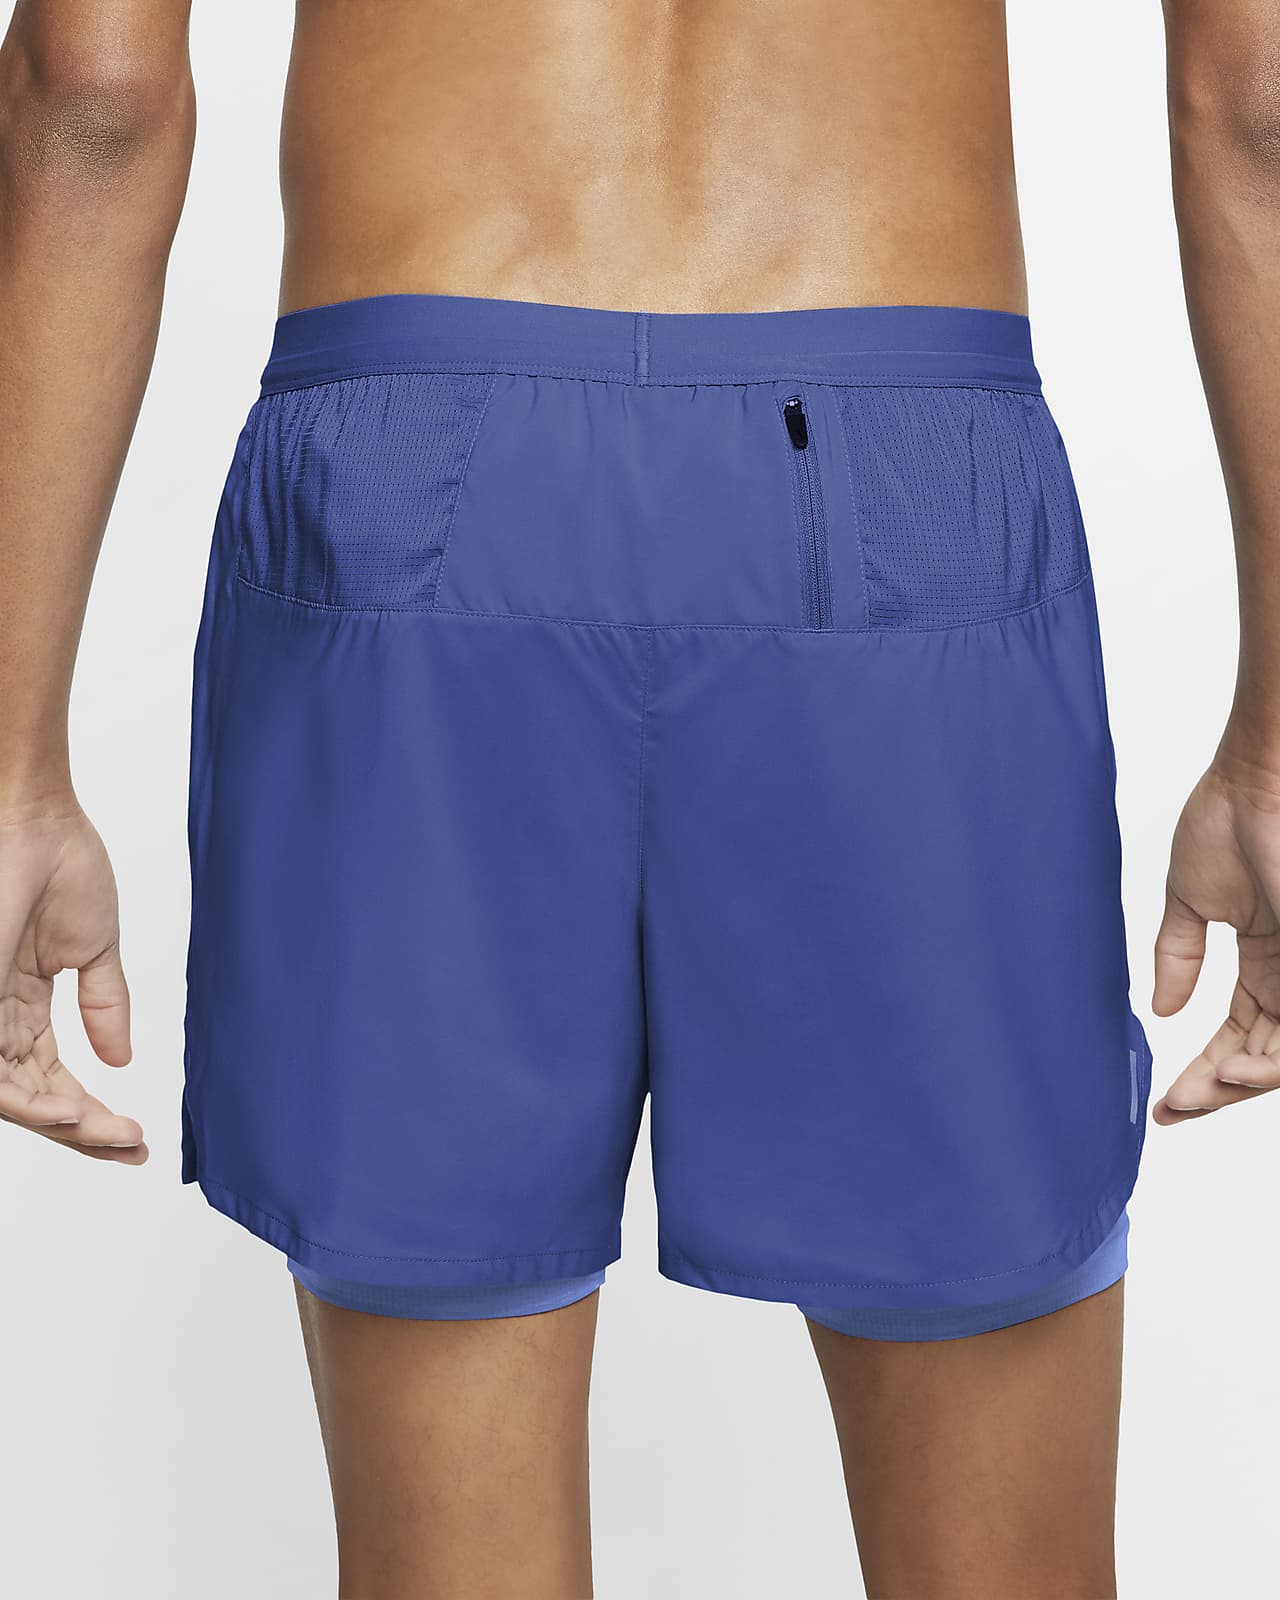 Nike Flex Stride Shorts - Men's 5 Inseam